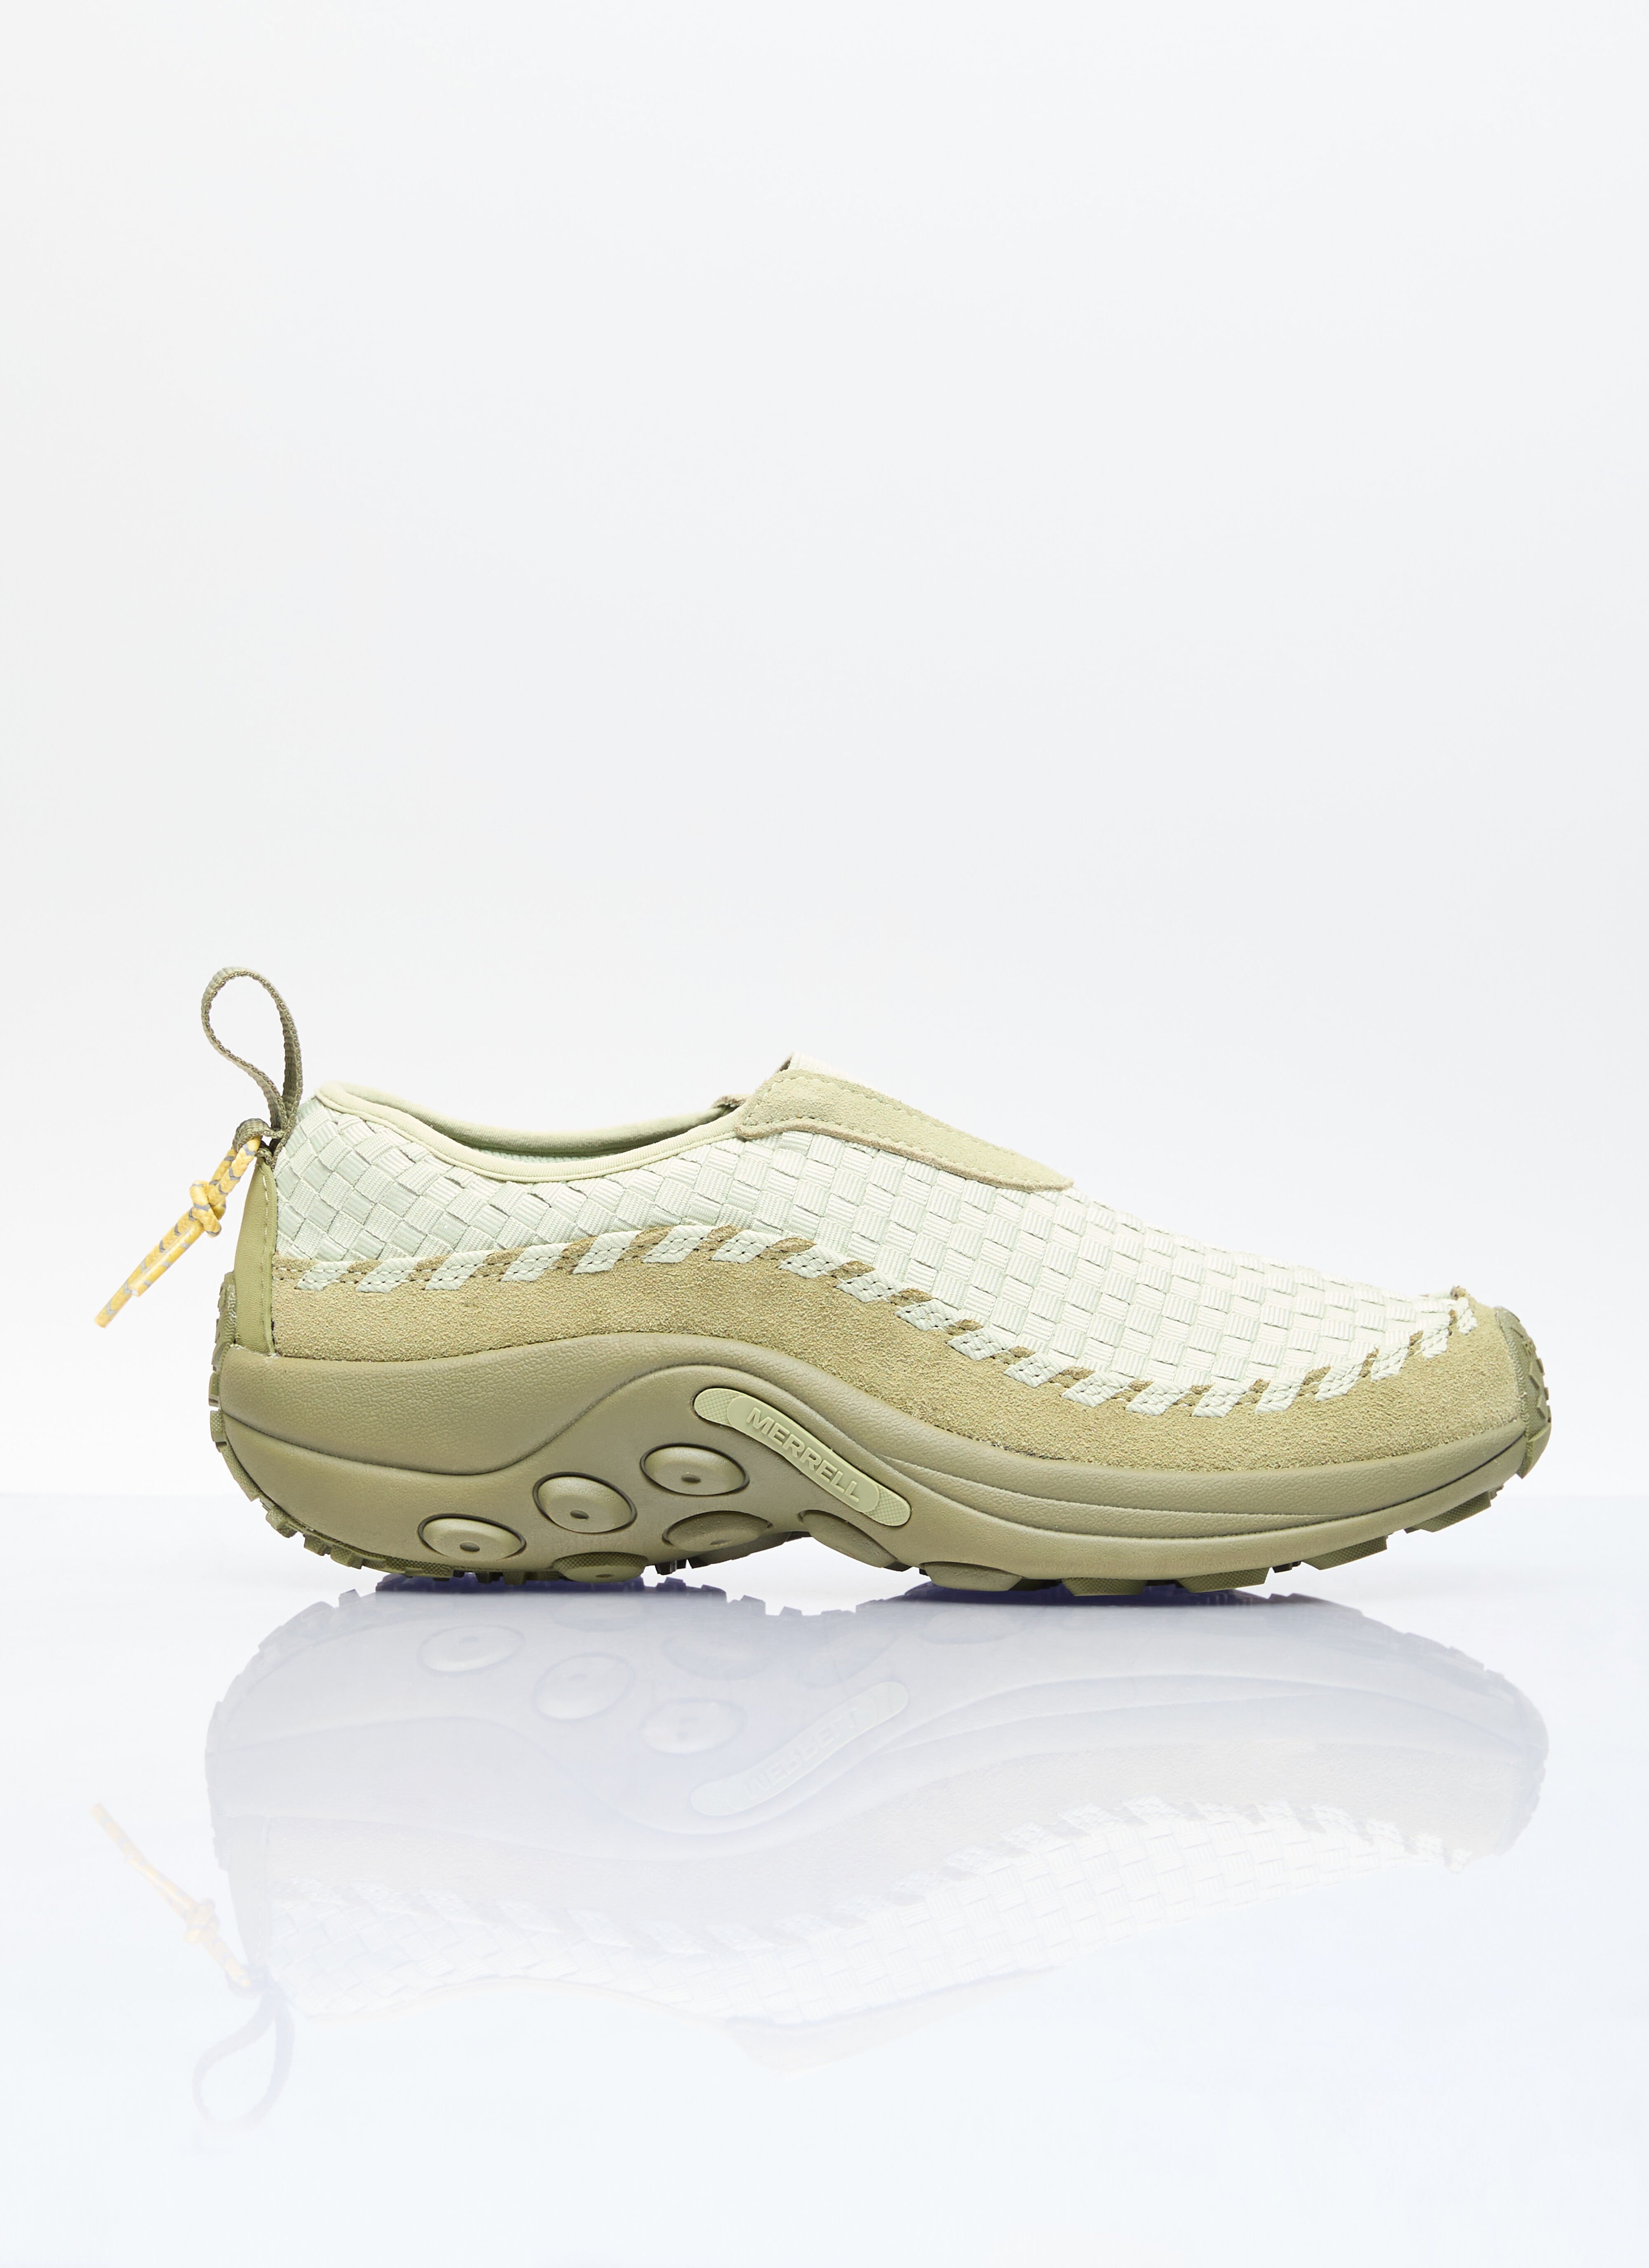 Oakley Factory Team Jungle Moc Woven Slip-On Shoes White oft0156002